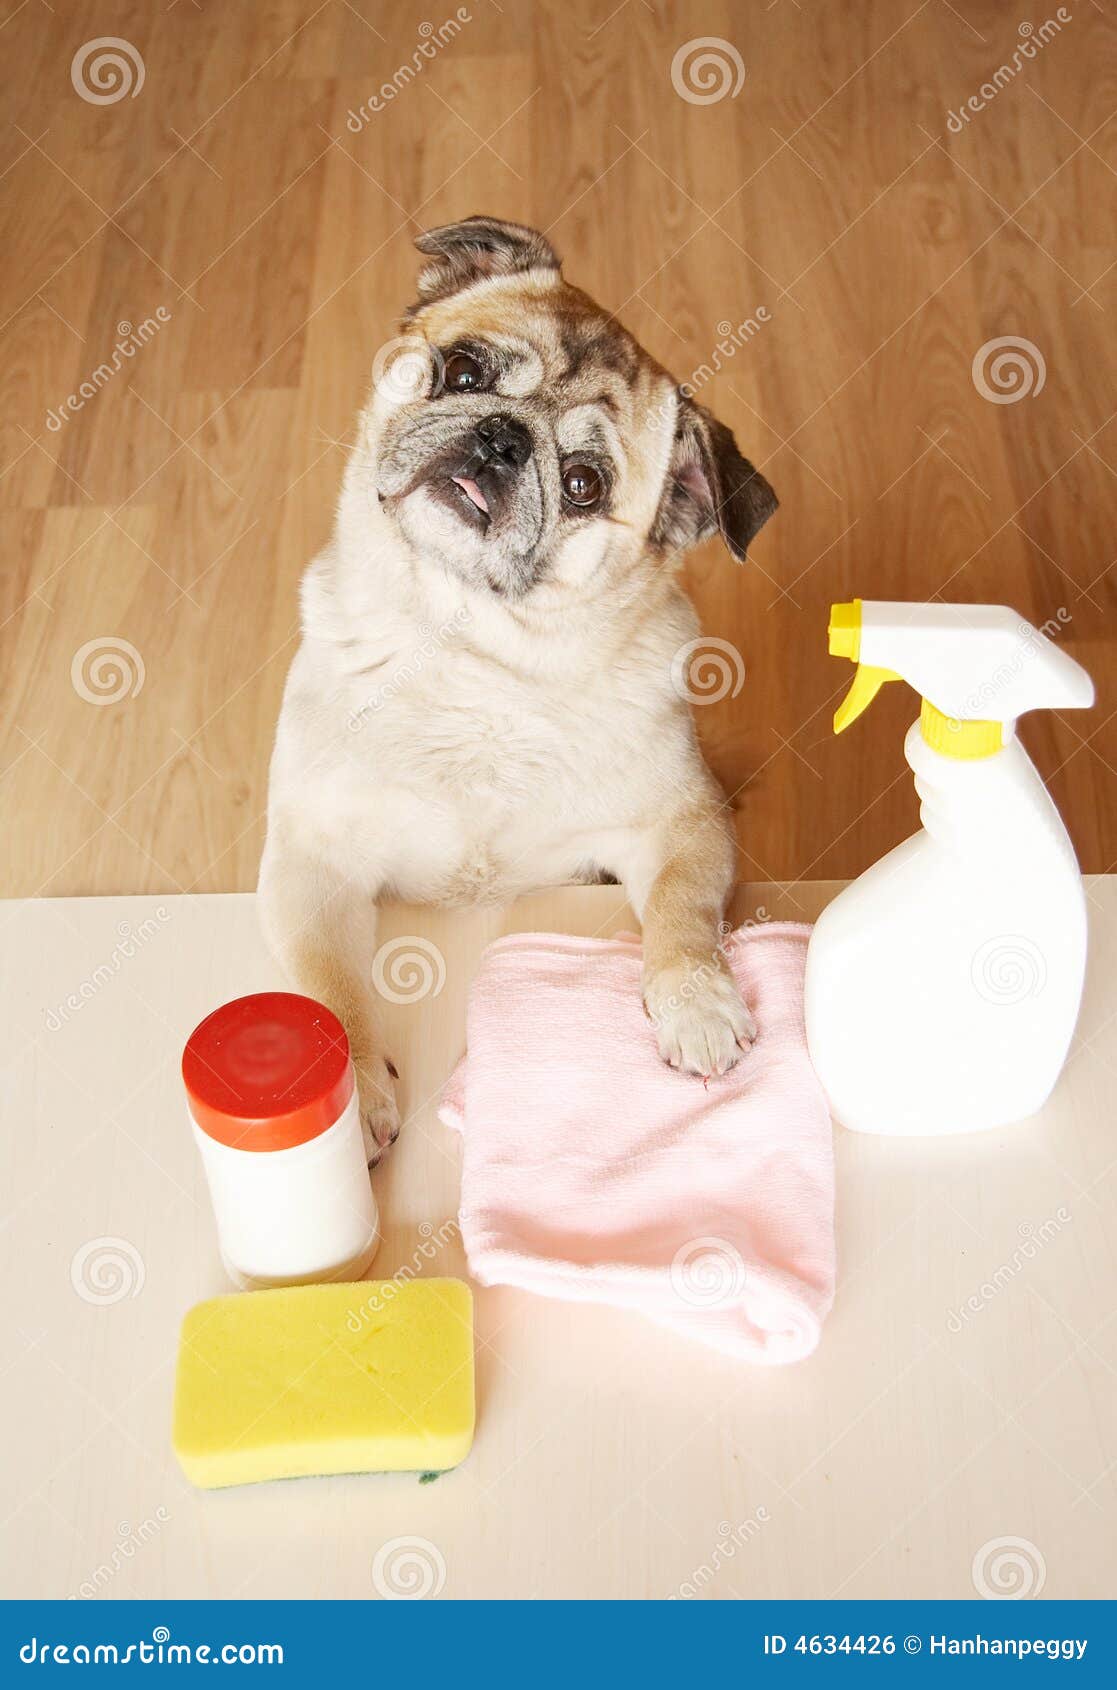 dog doing housework